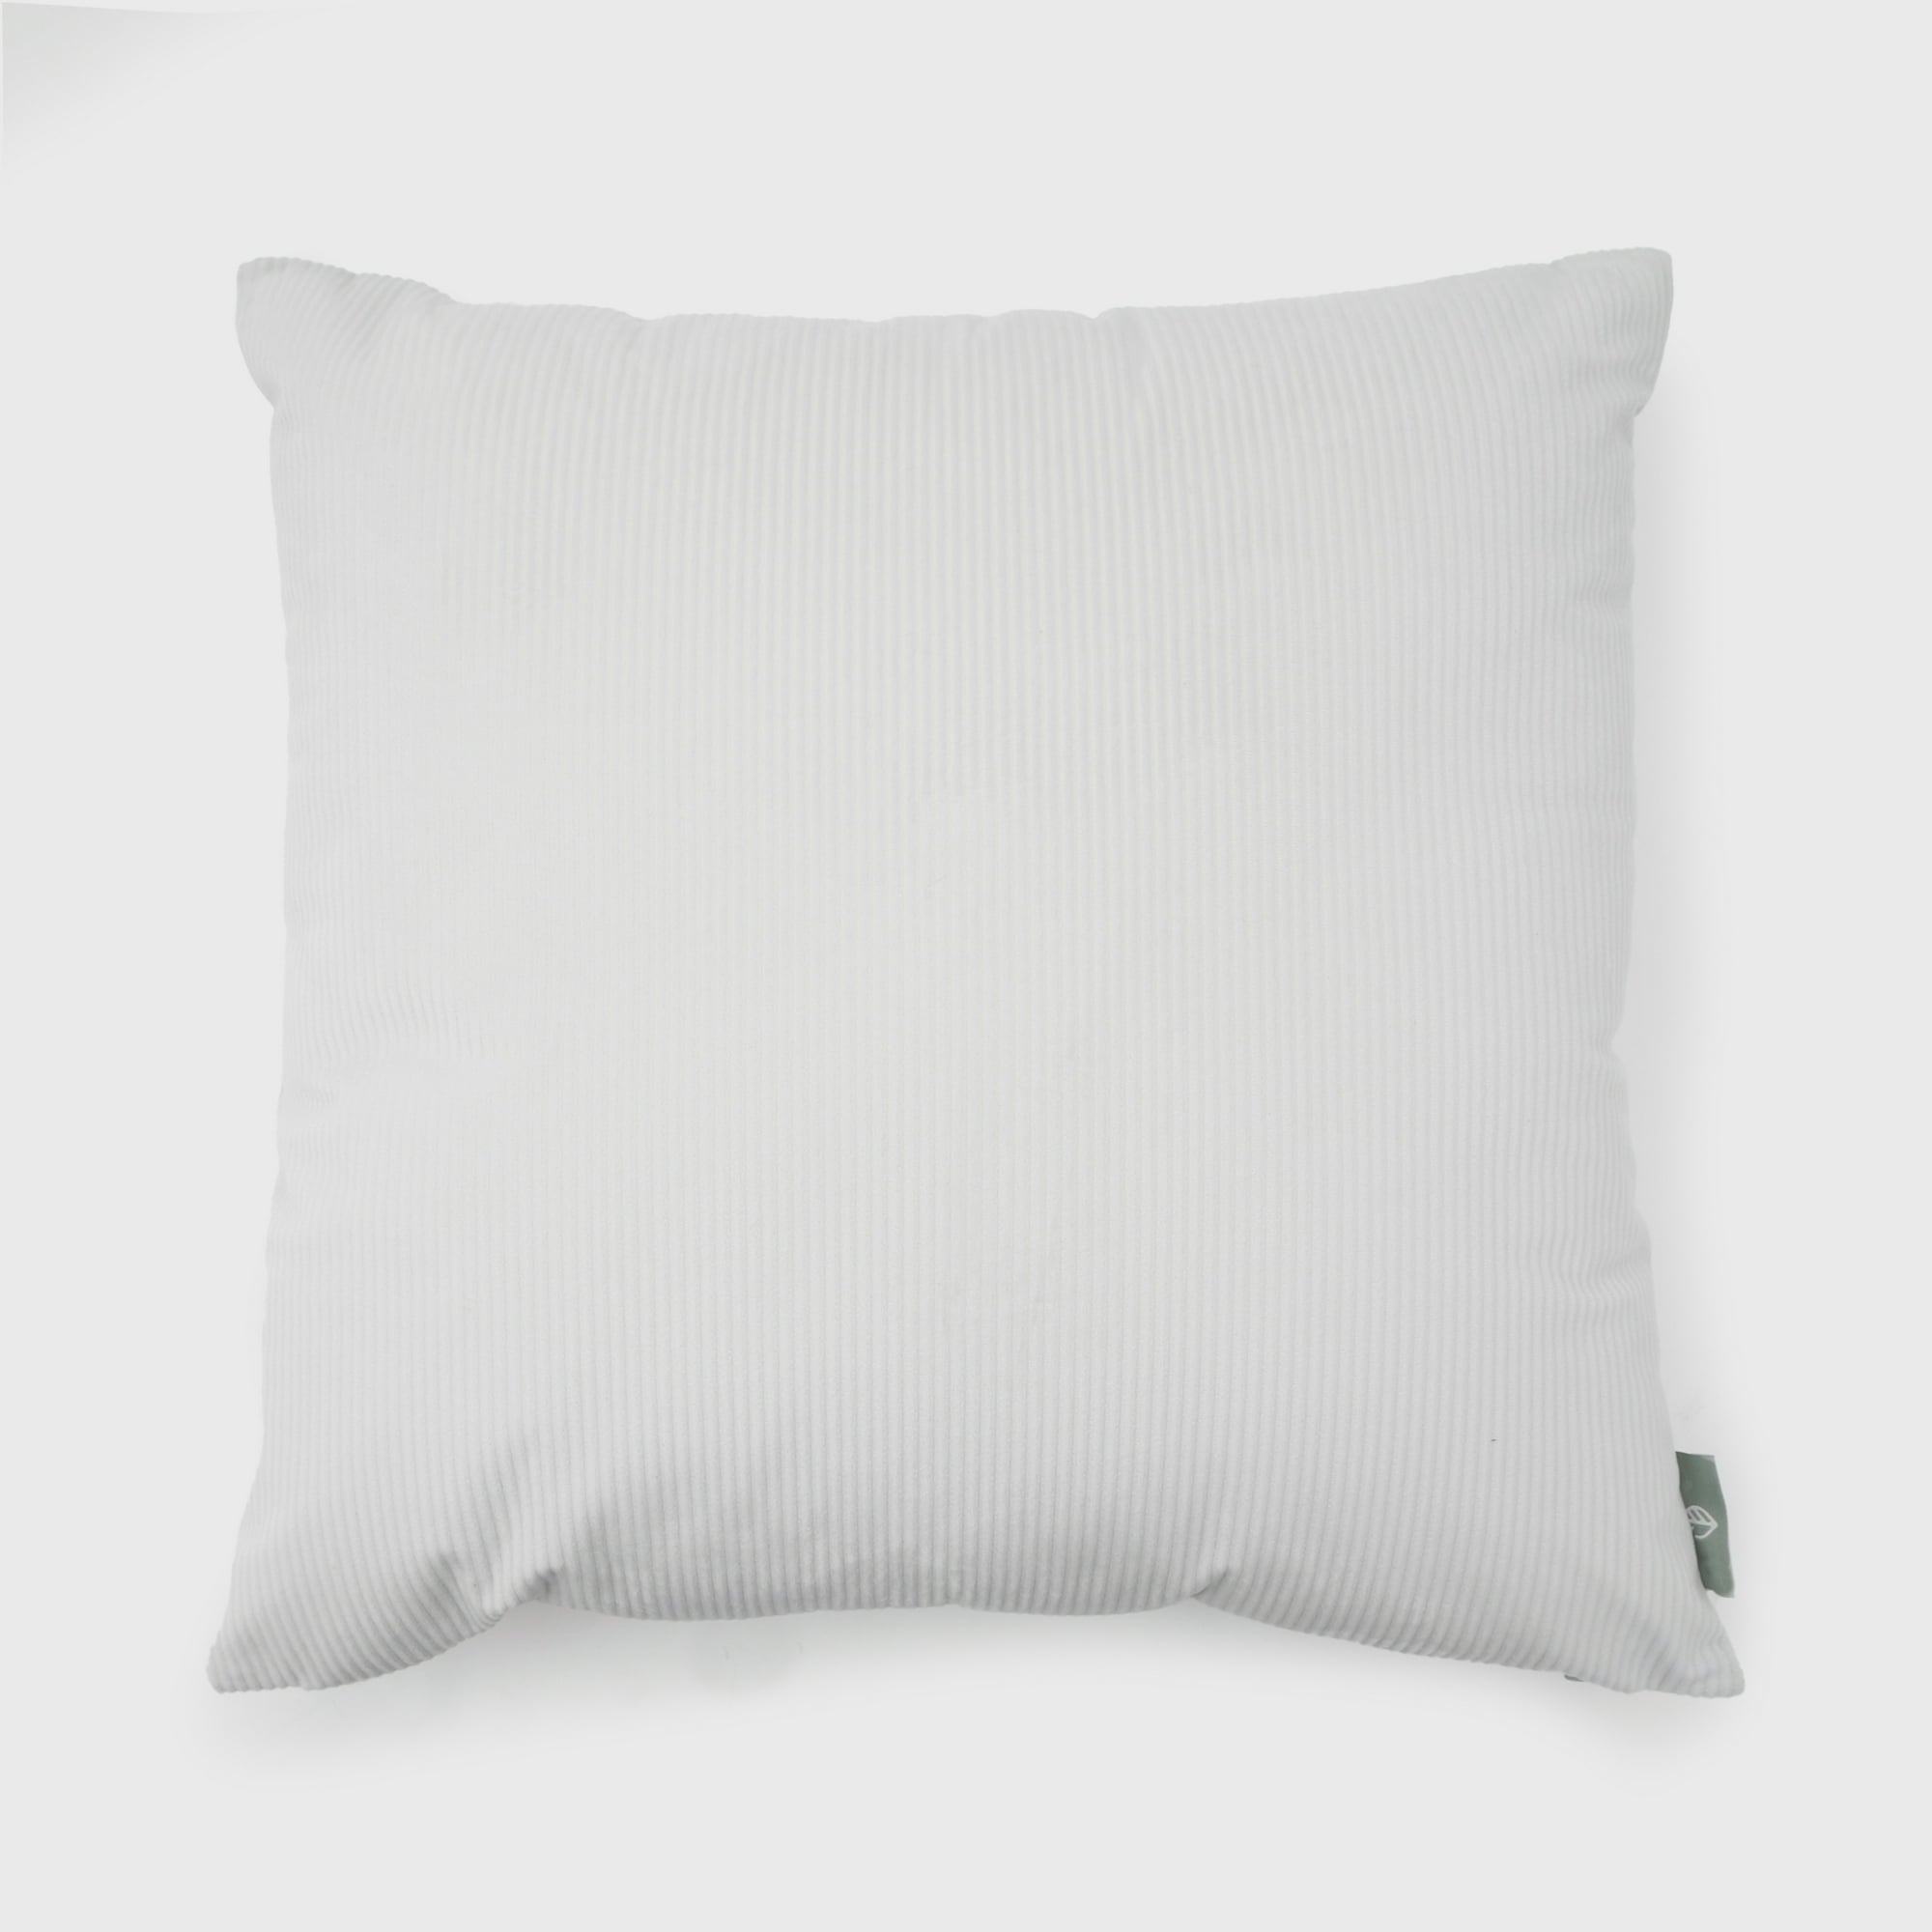 Evergrace Home Accent Pillow 18"x18"